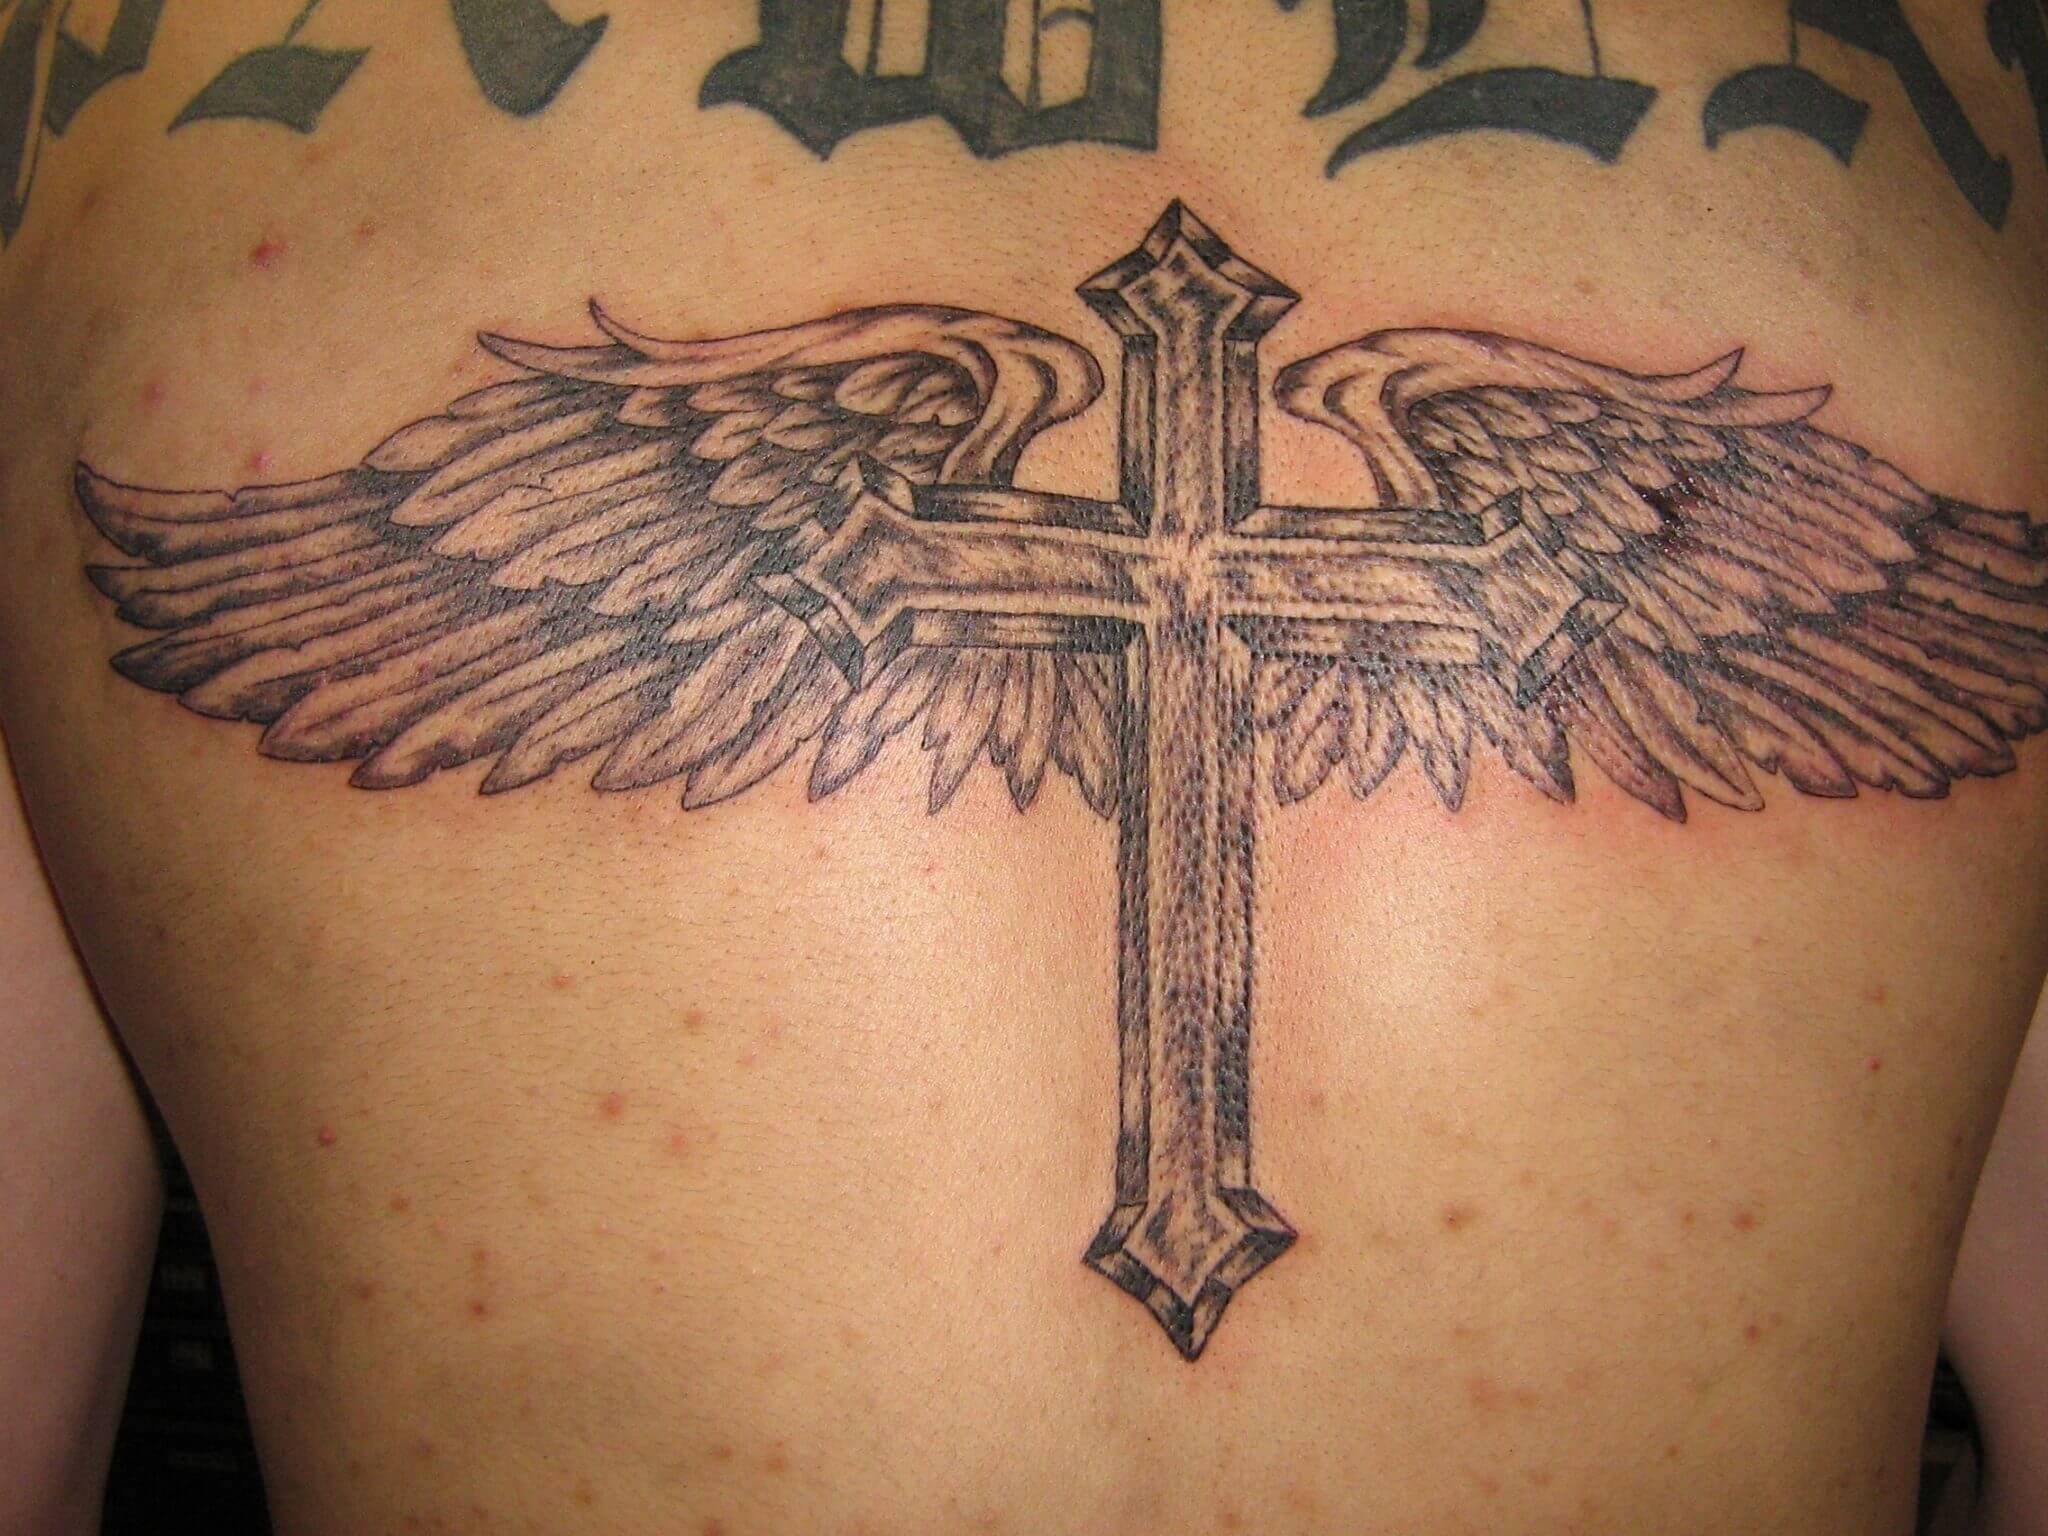 56 Best Cross Tattoos For Men Improb in measurements 2048 X 1536